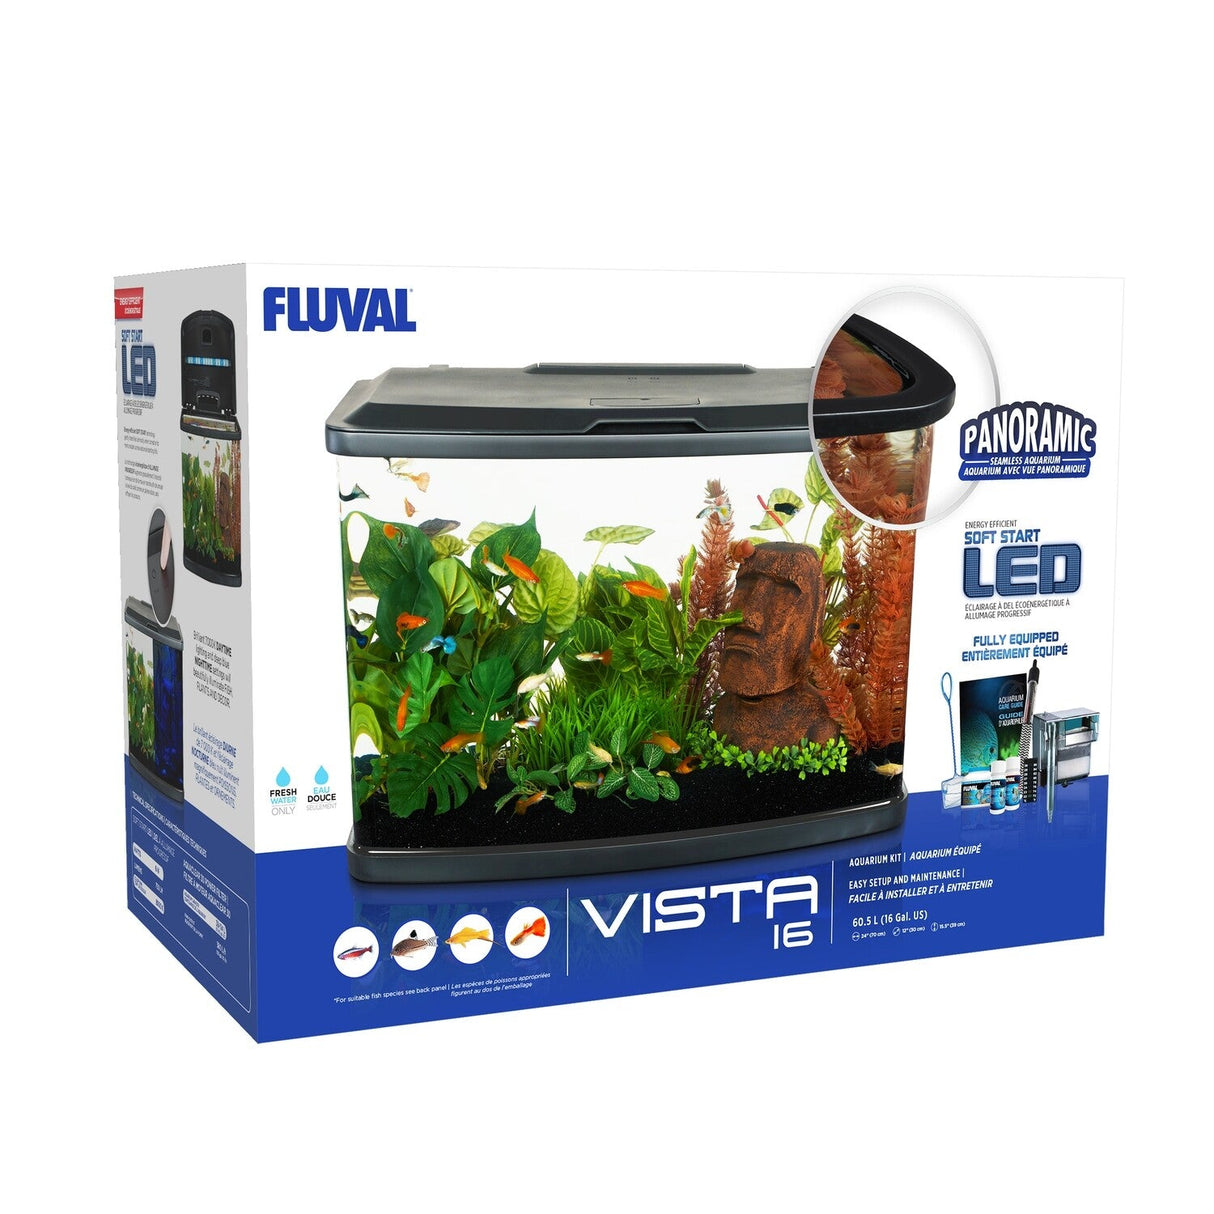 Fluval Vista Aquarium Kit 16 Gallon (60L) 15245